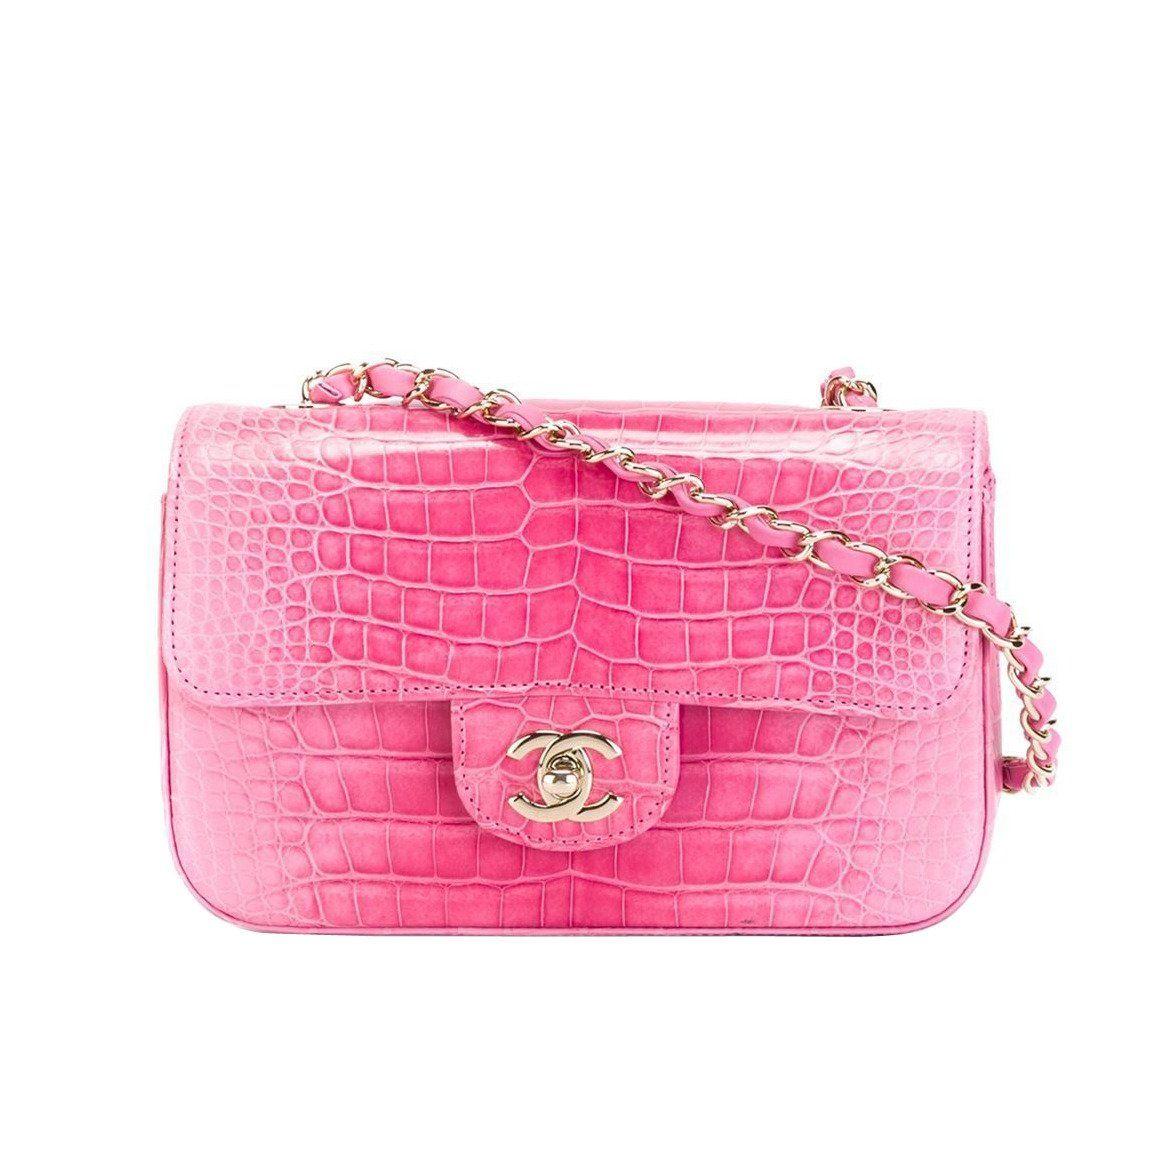 Pink Crocodile Logo - Chanel Pink Crocodile Shoulder Bag at 1stdibs